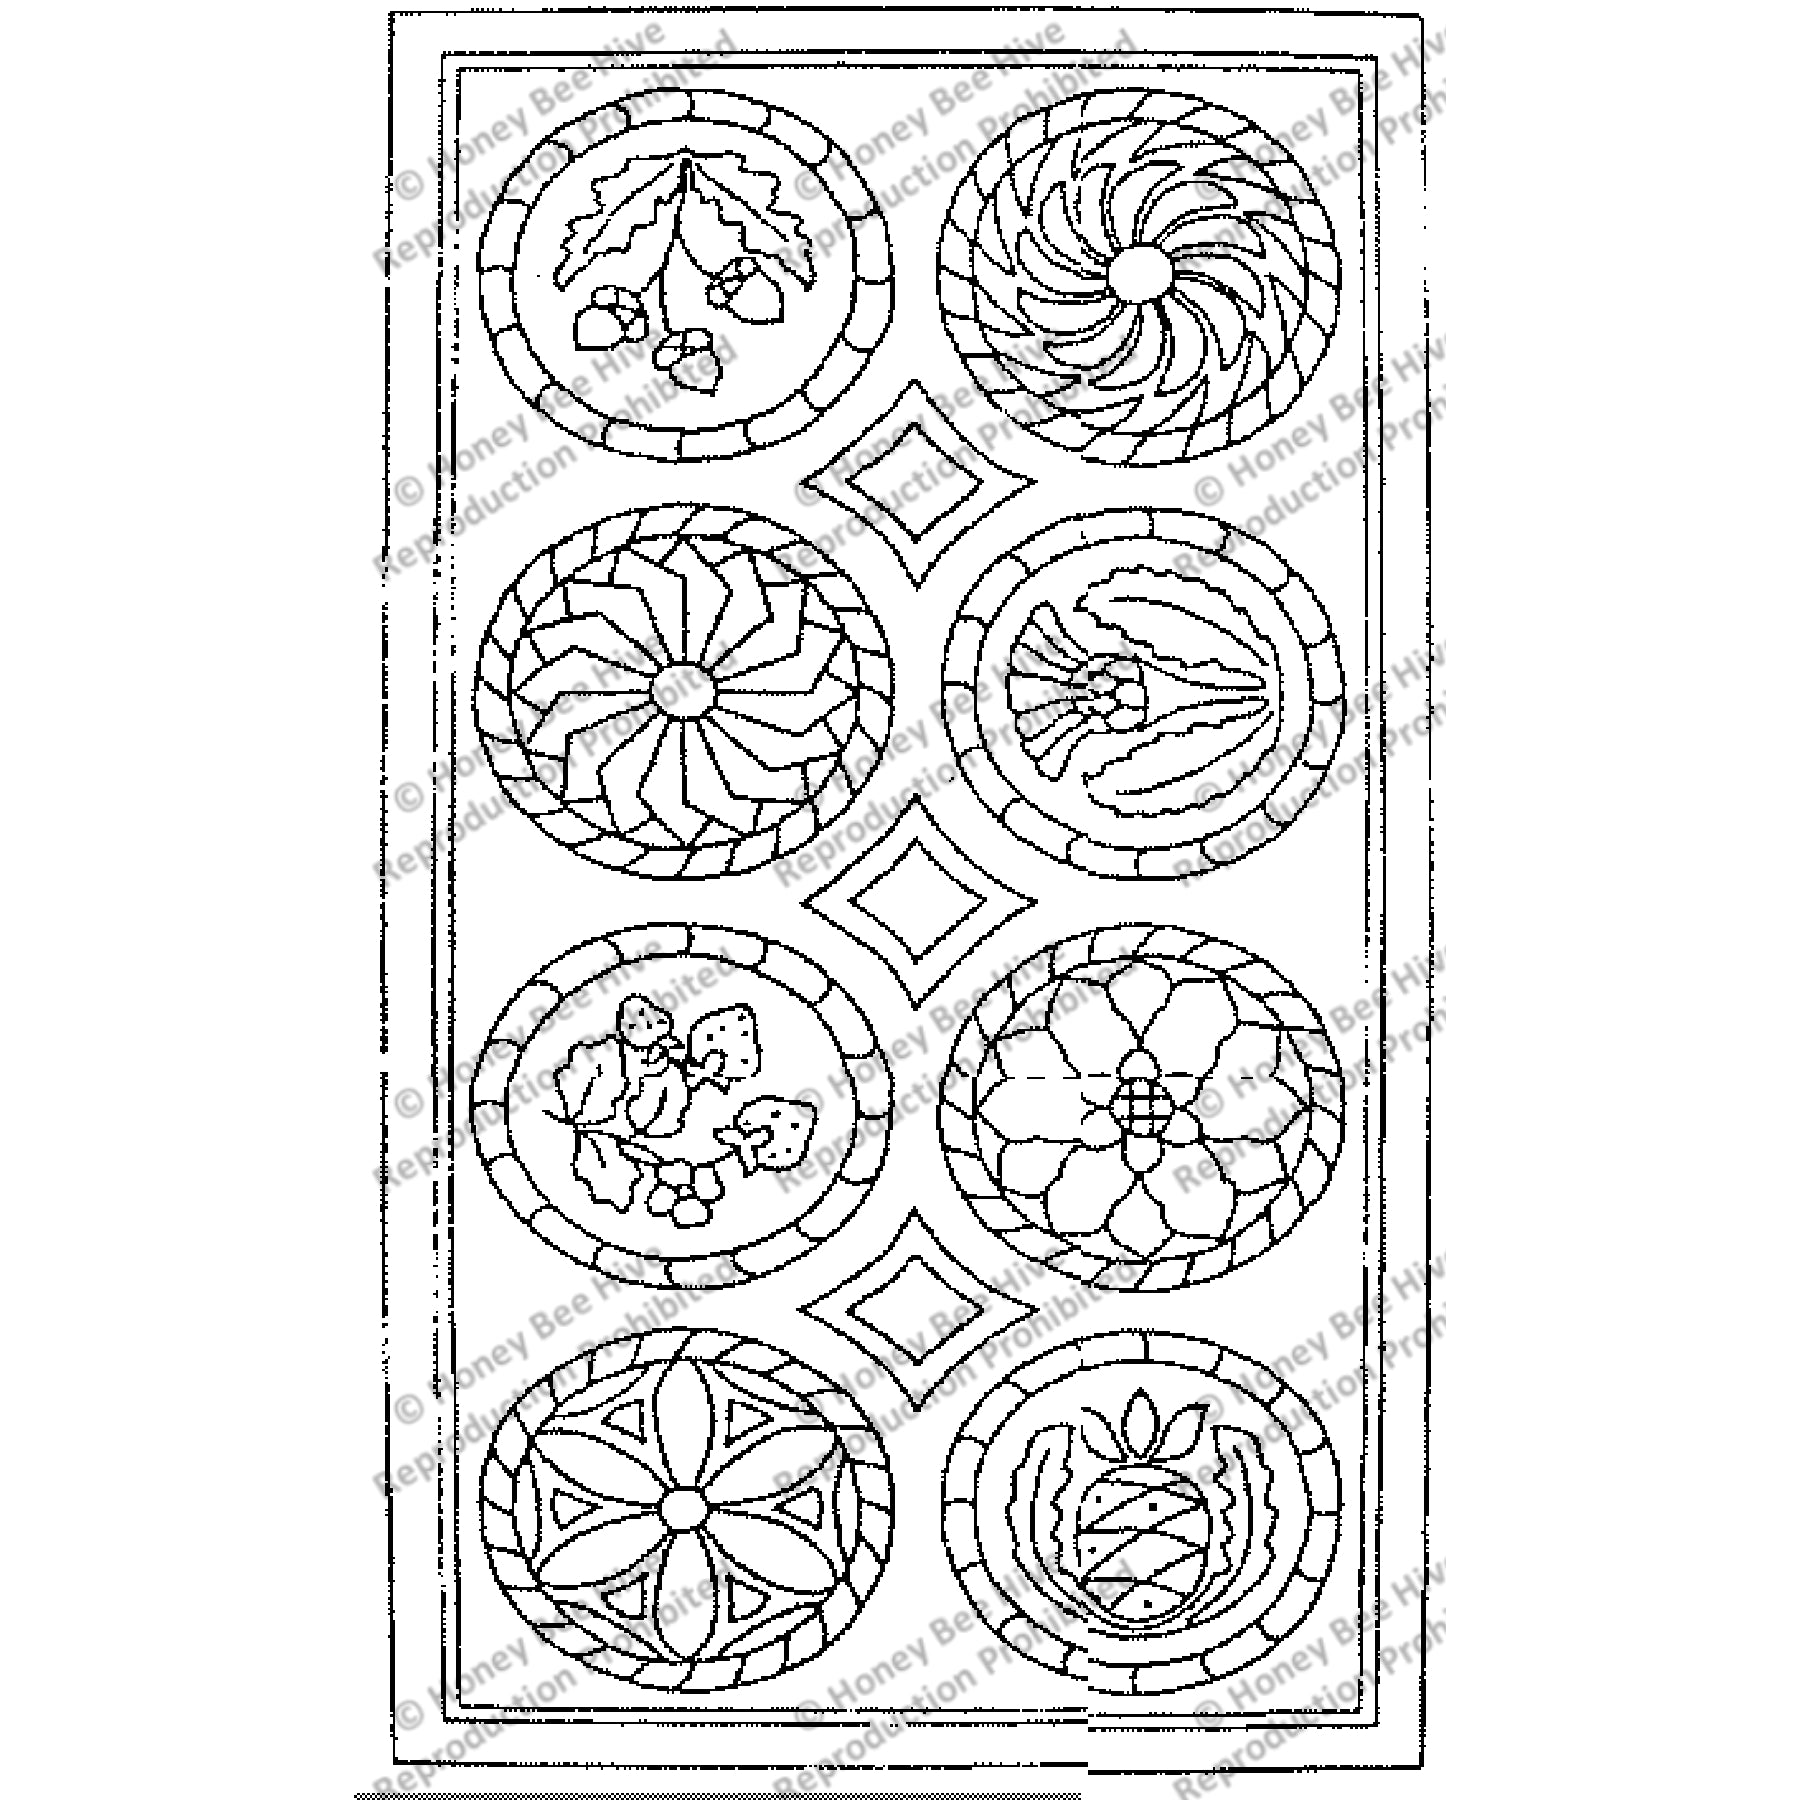 Buttermold-Widecut, rug hooking pattern